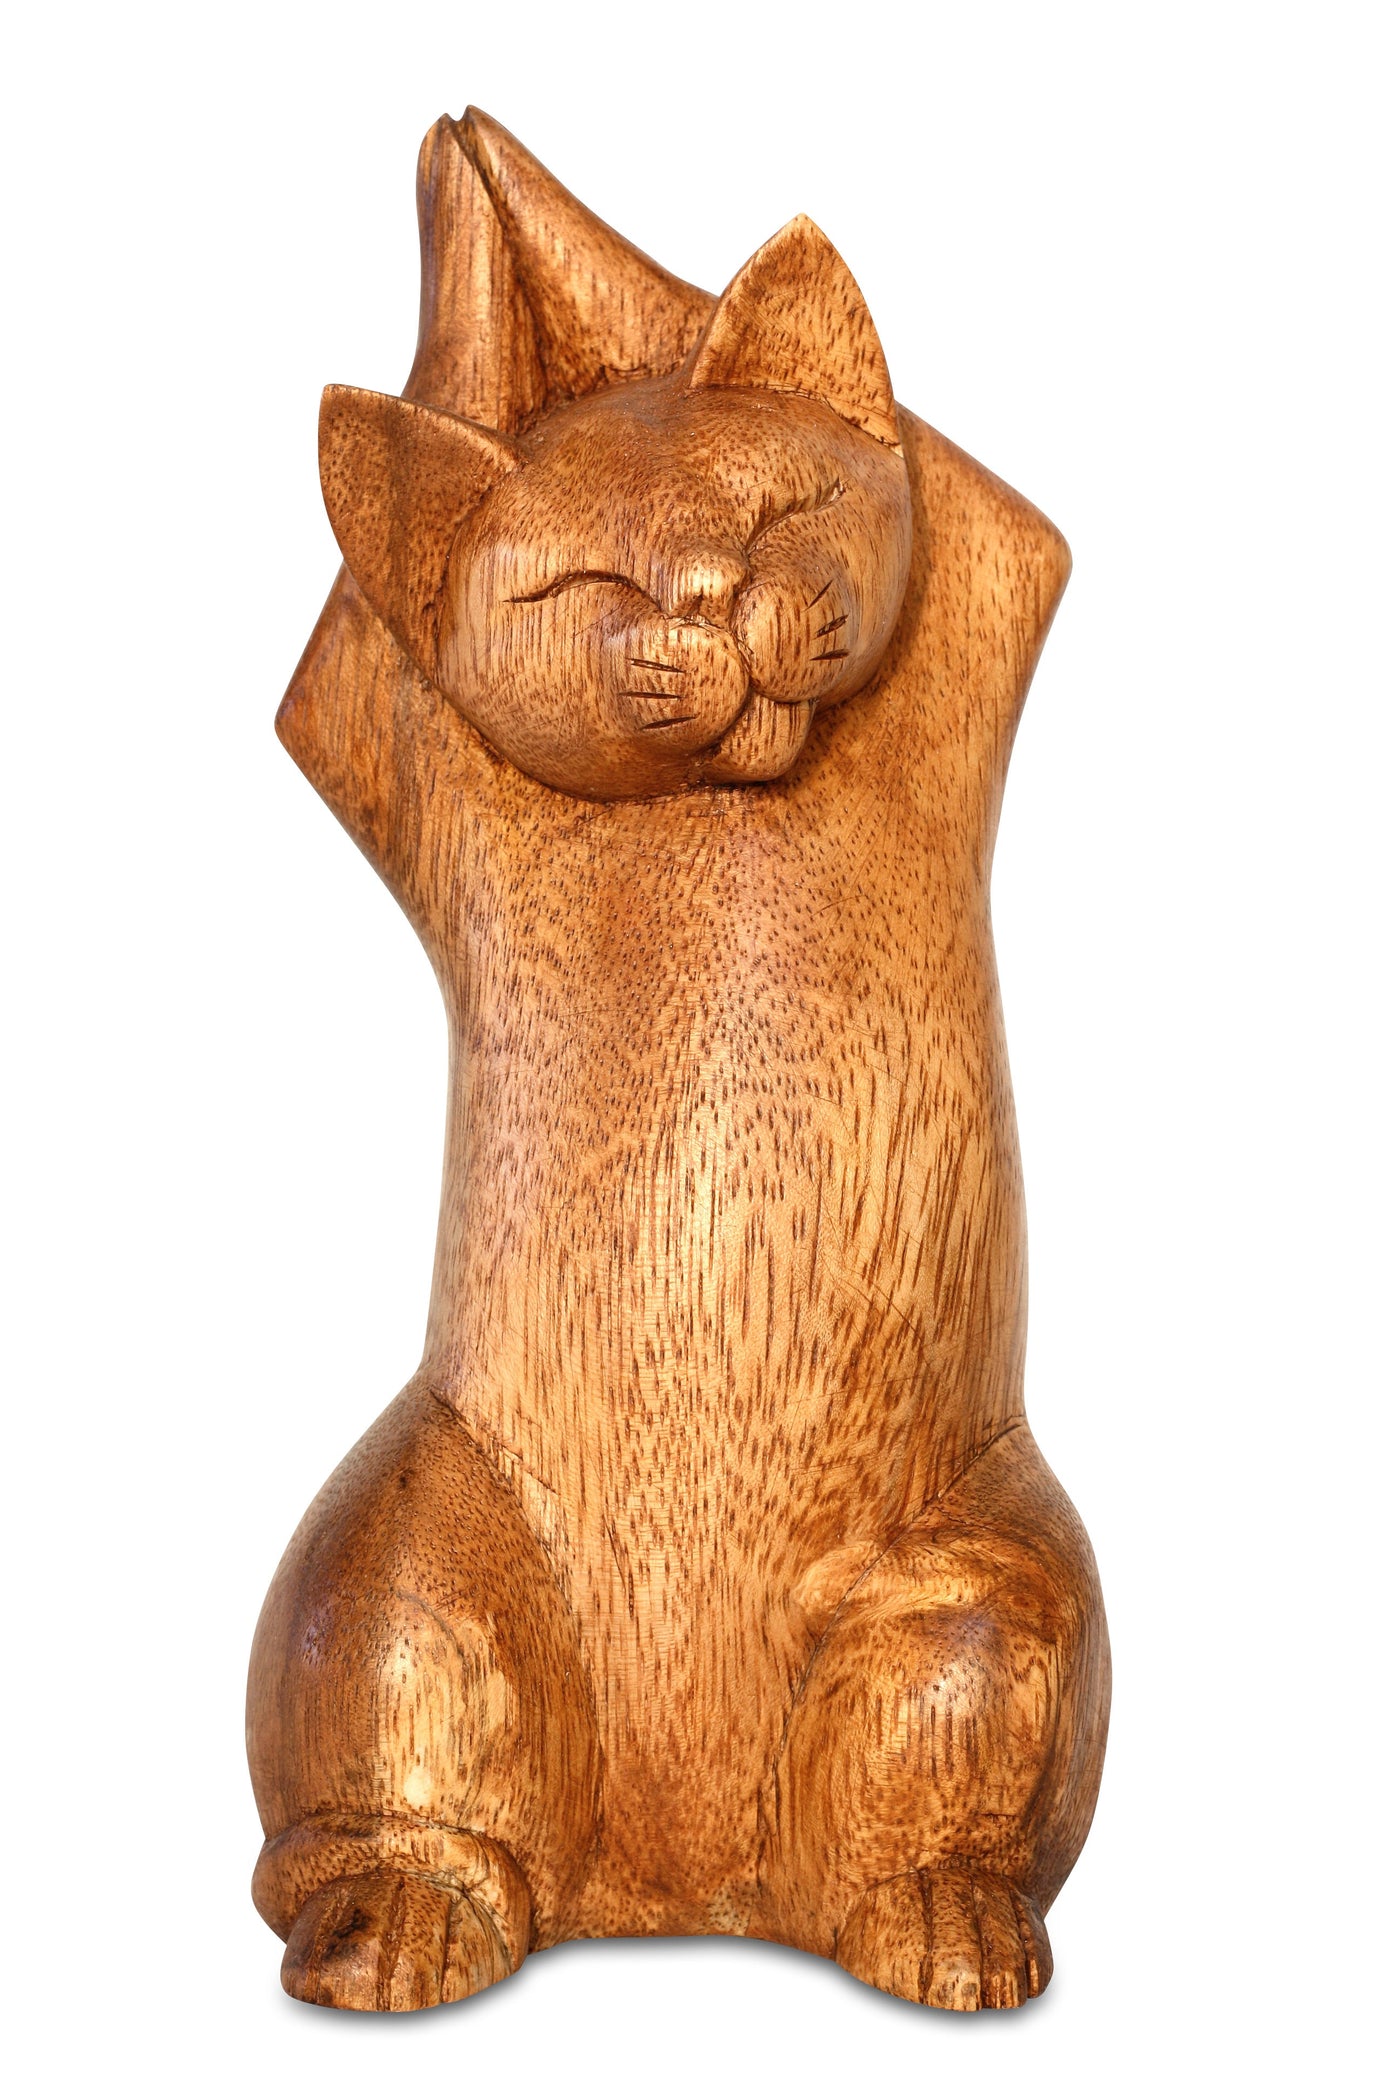 Wooden Handmade Hand Carved Yoga Upward Salute Pose Cat Figurine Sculpture Statue